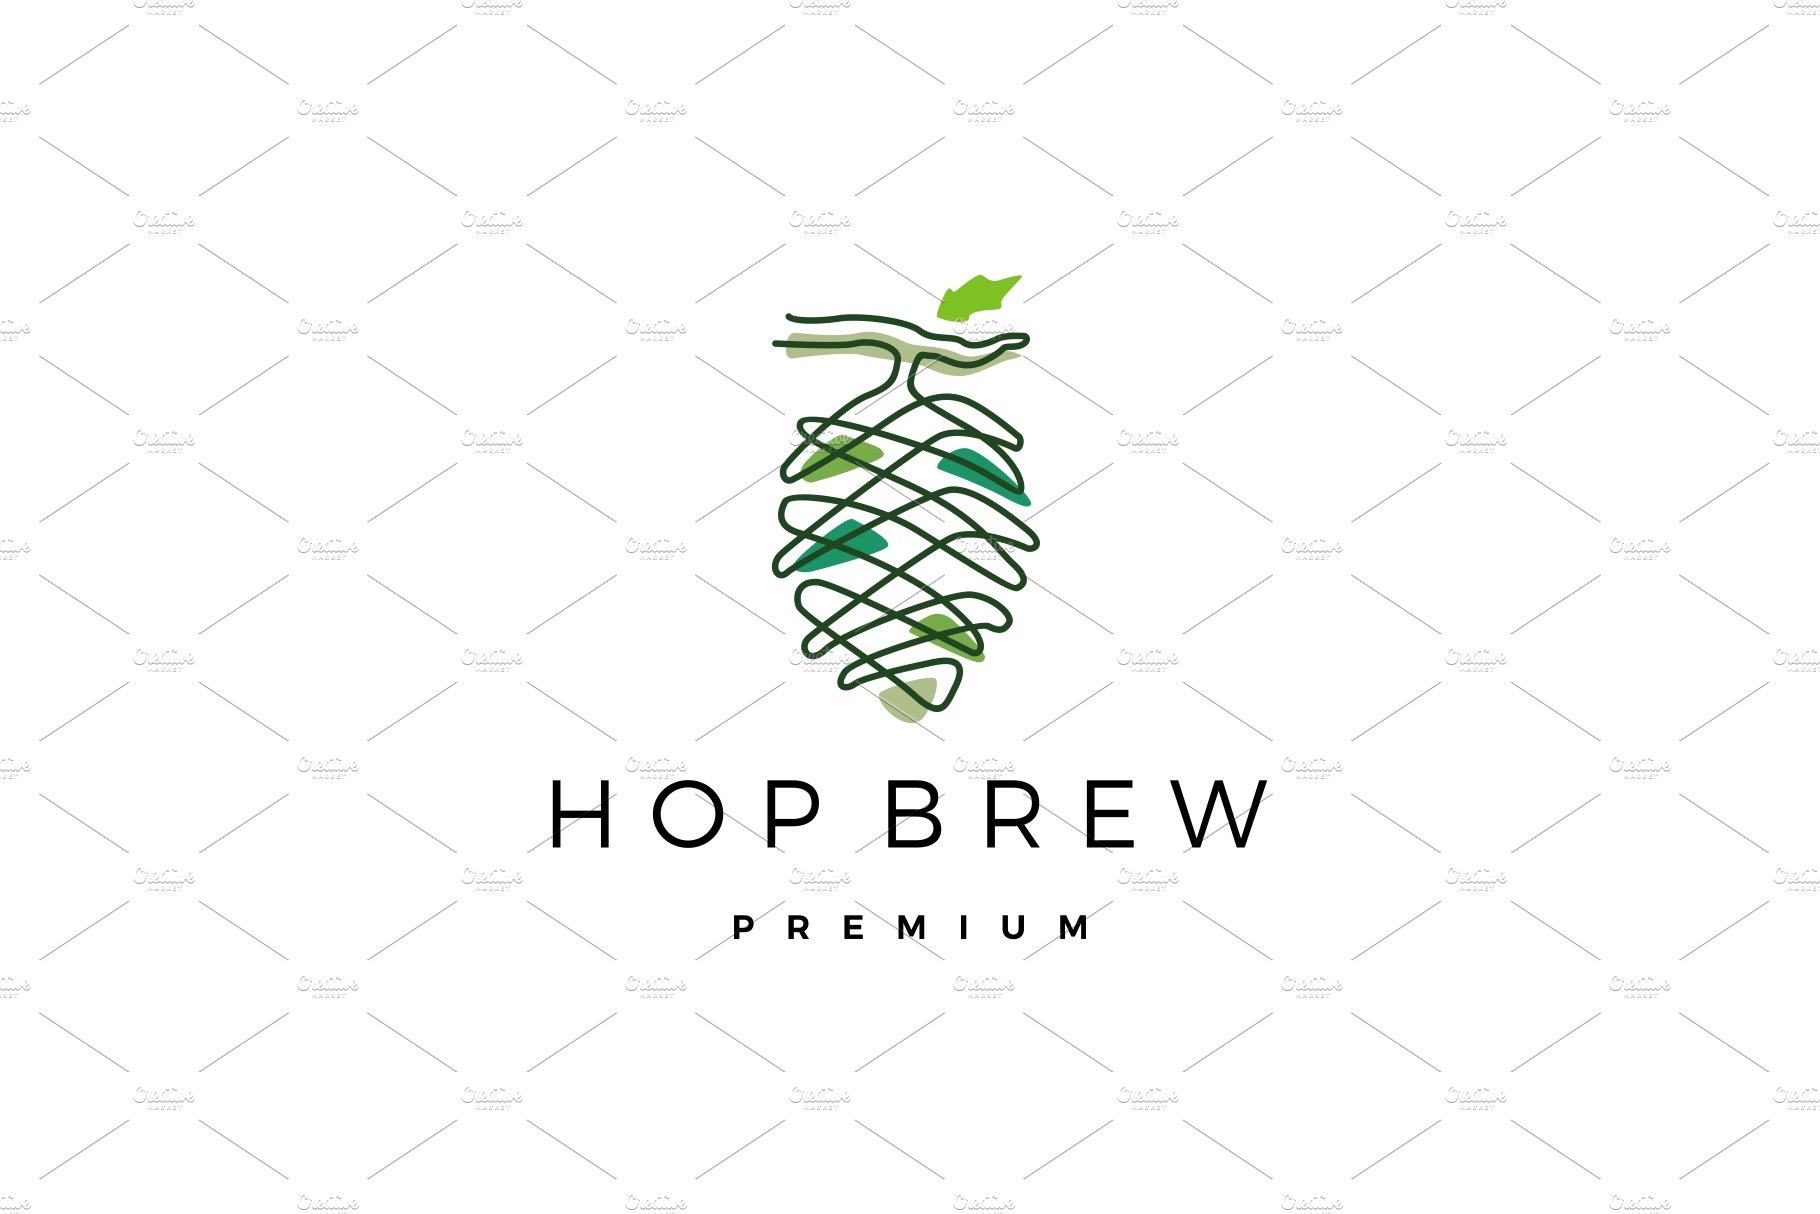 hop brew logo vector icon cover image.